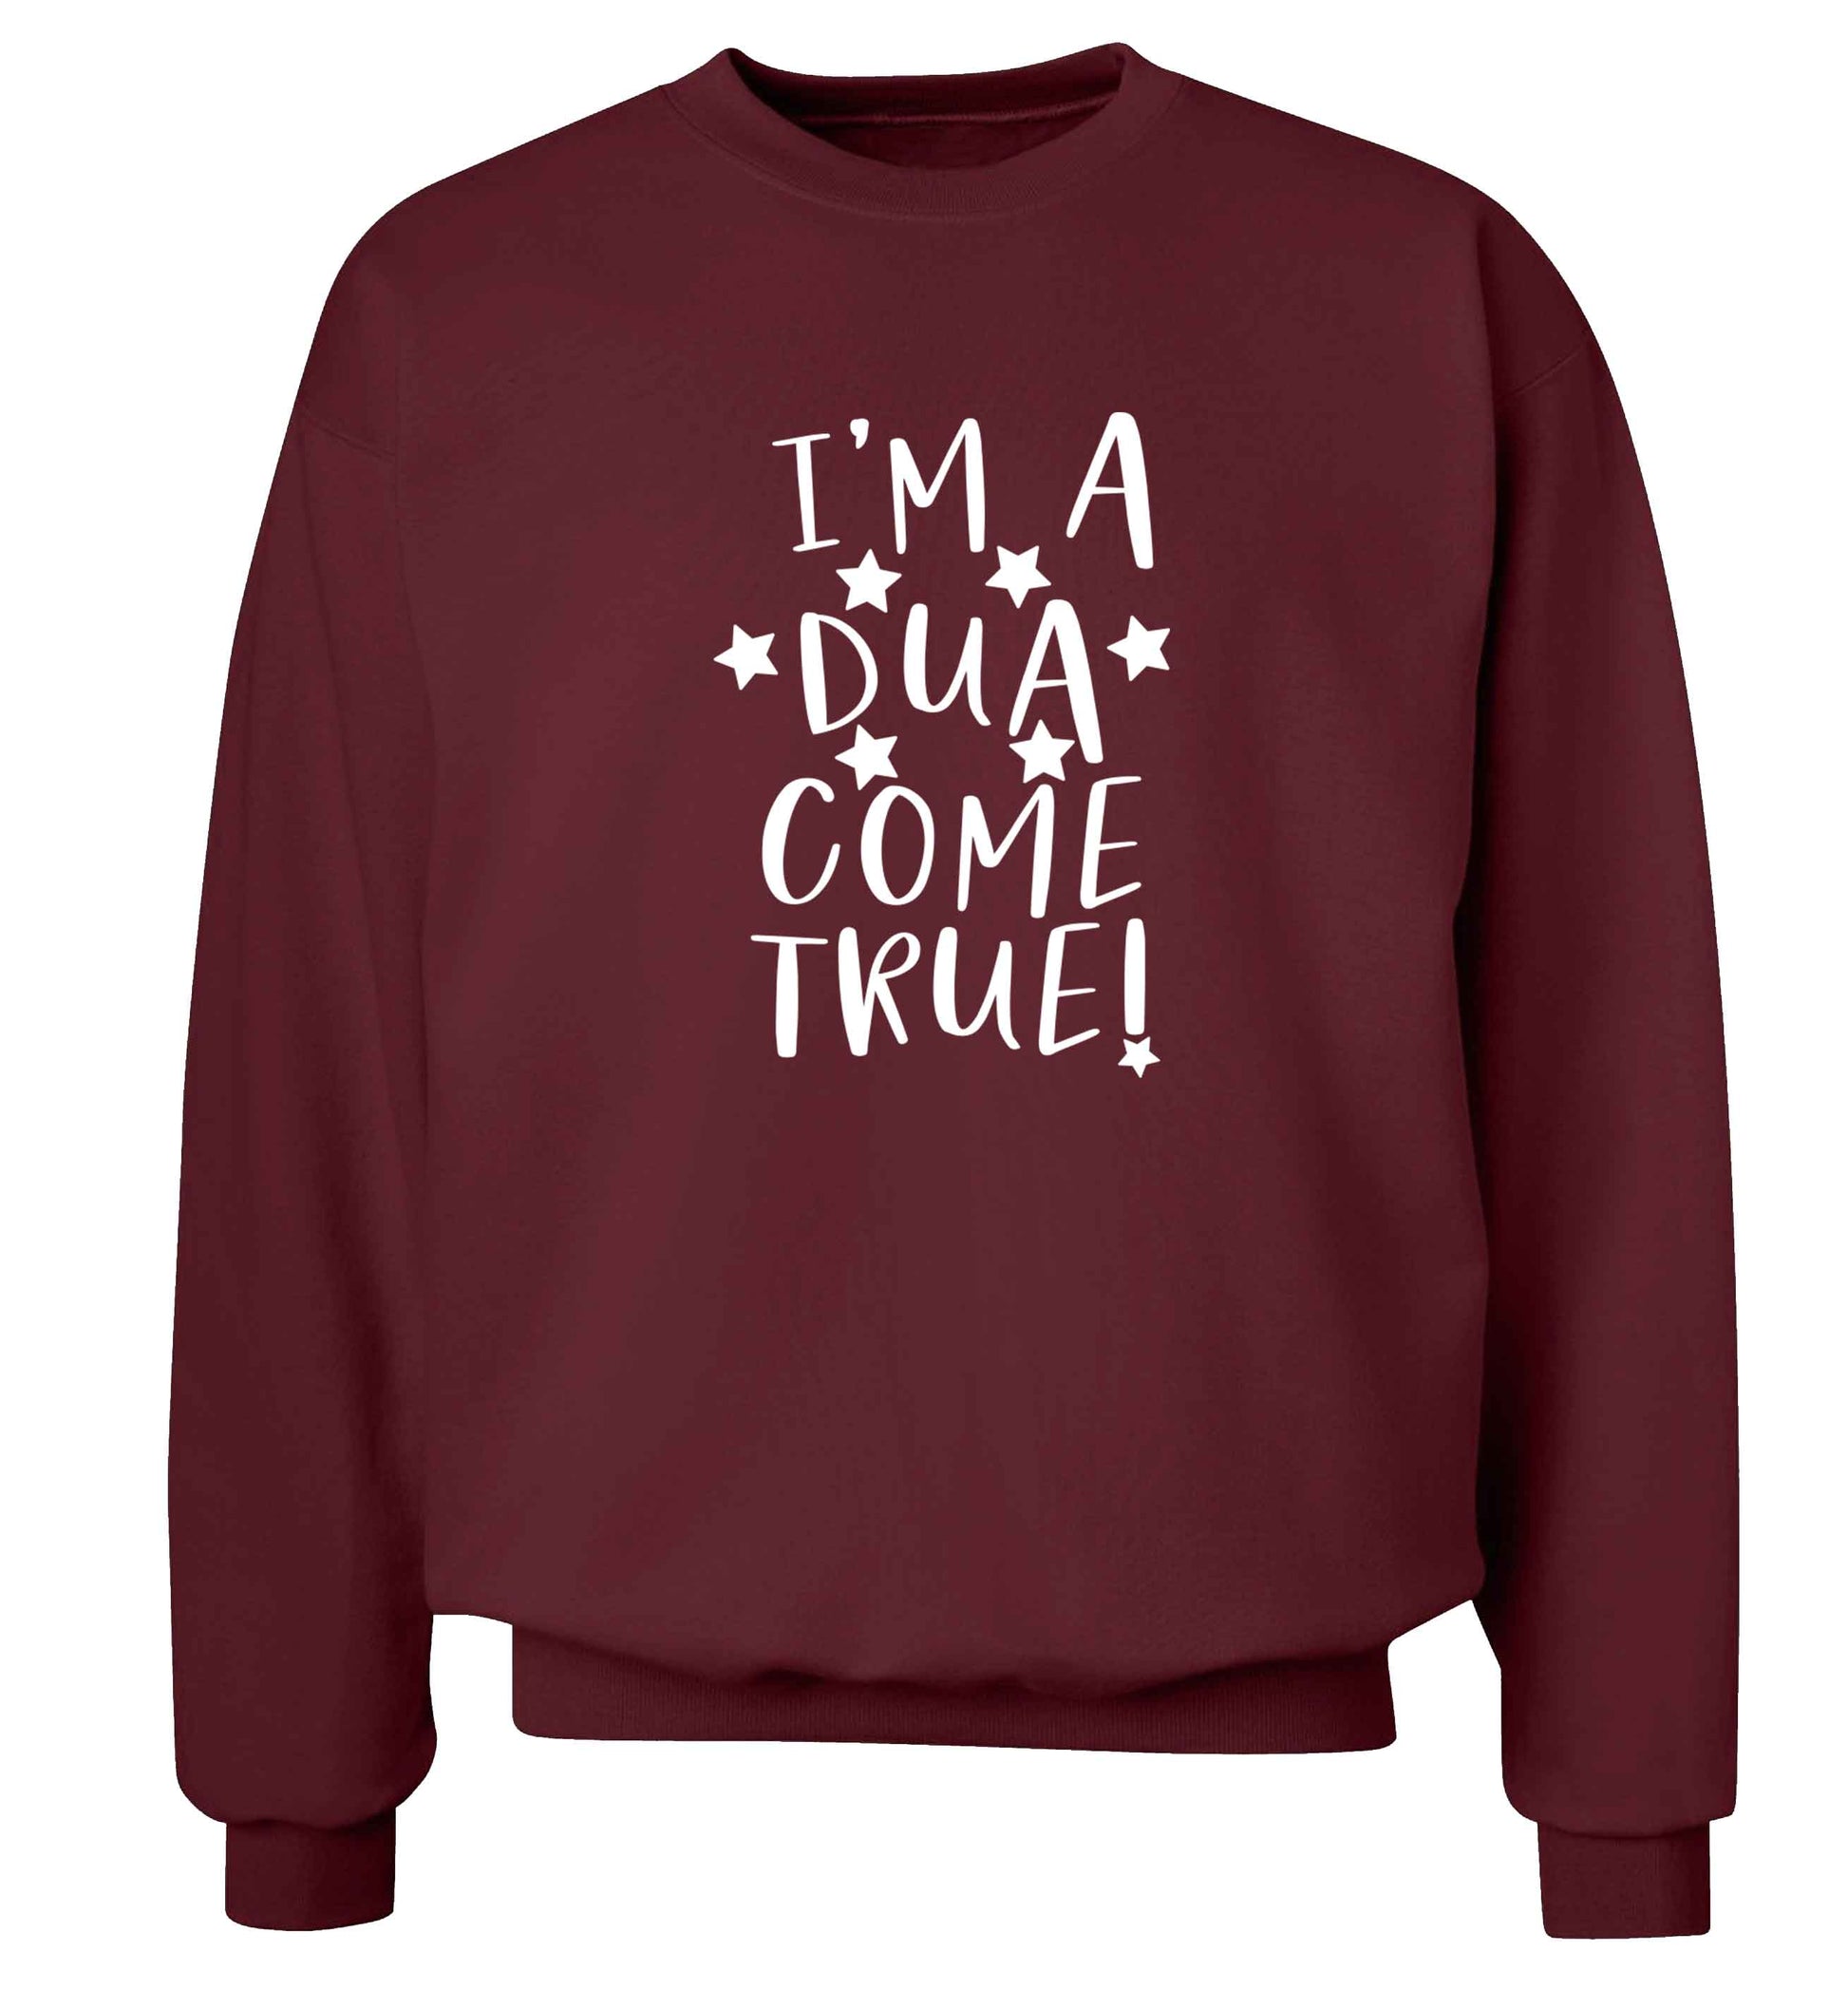 I'm a dua come true adult's unisex maroon sweater 2XL